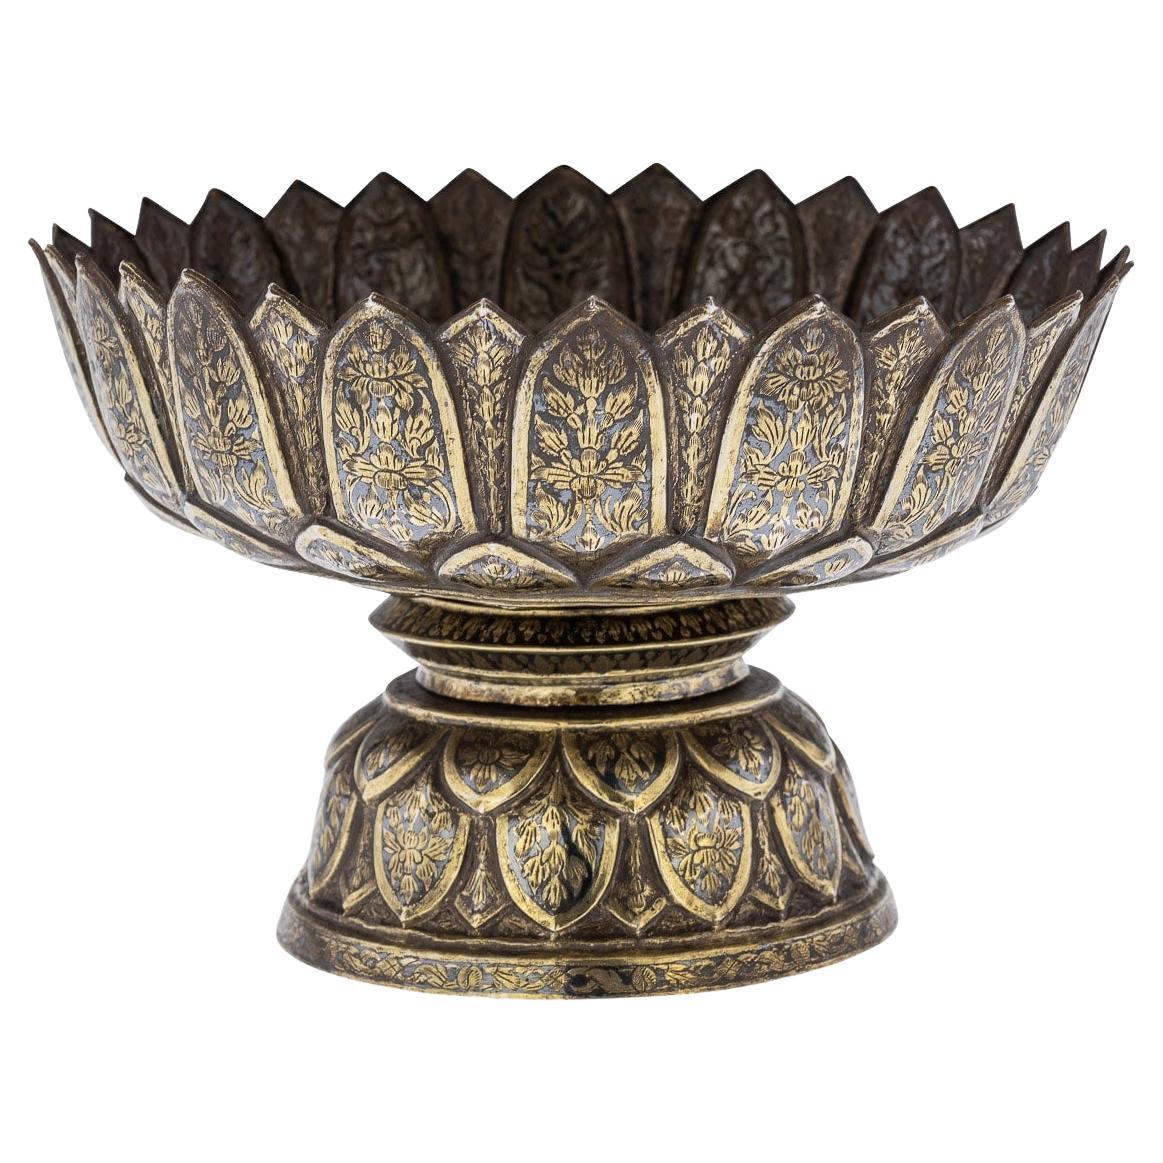 19th Century Thai Solid Silver-Gilt Niello Enamel Bowl, Siam, c.1800